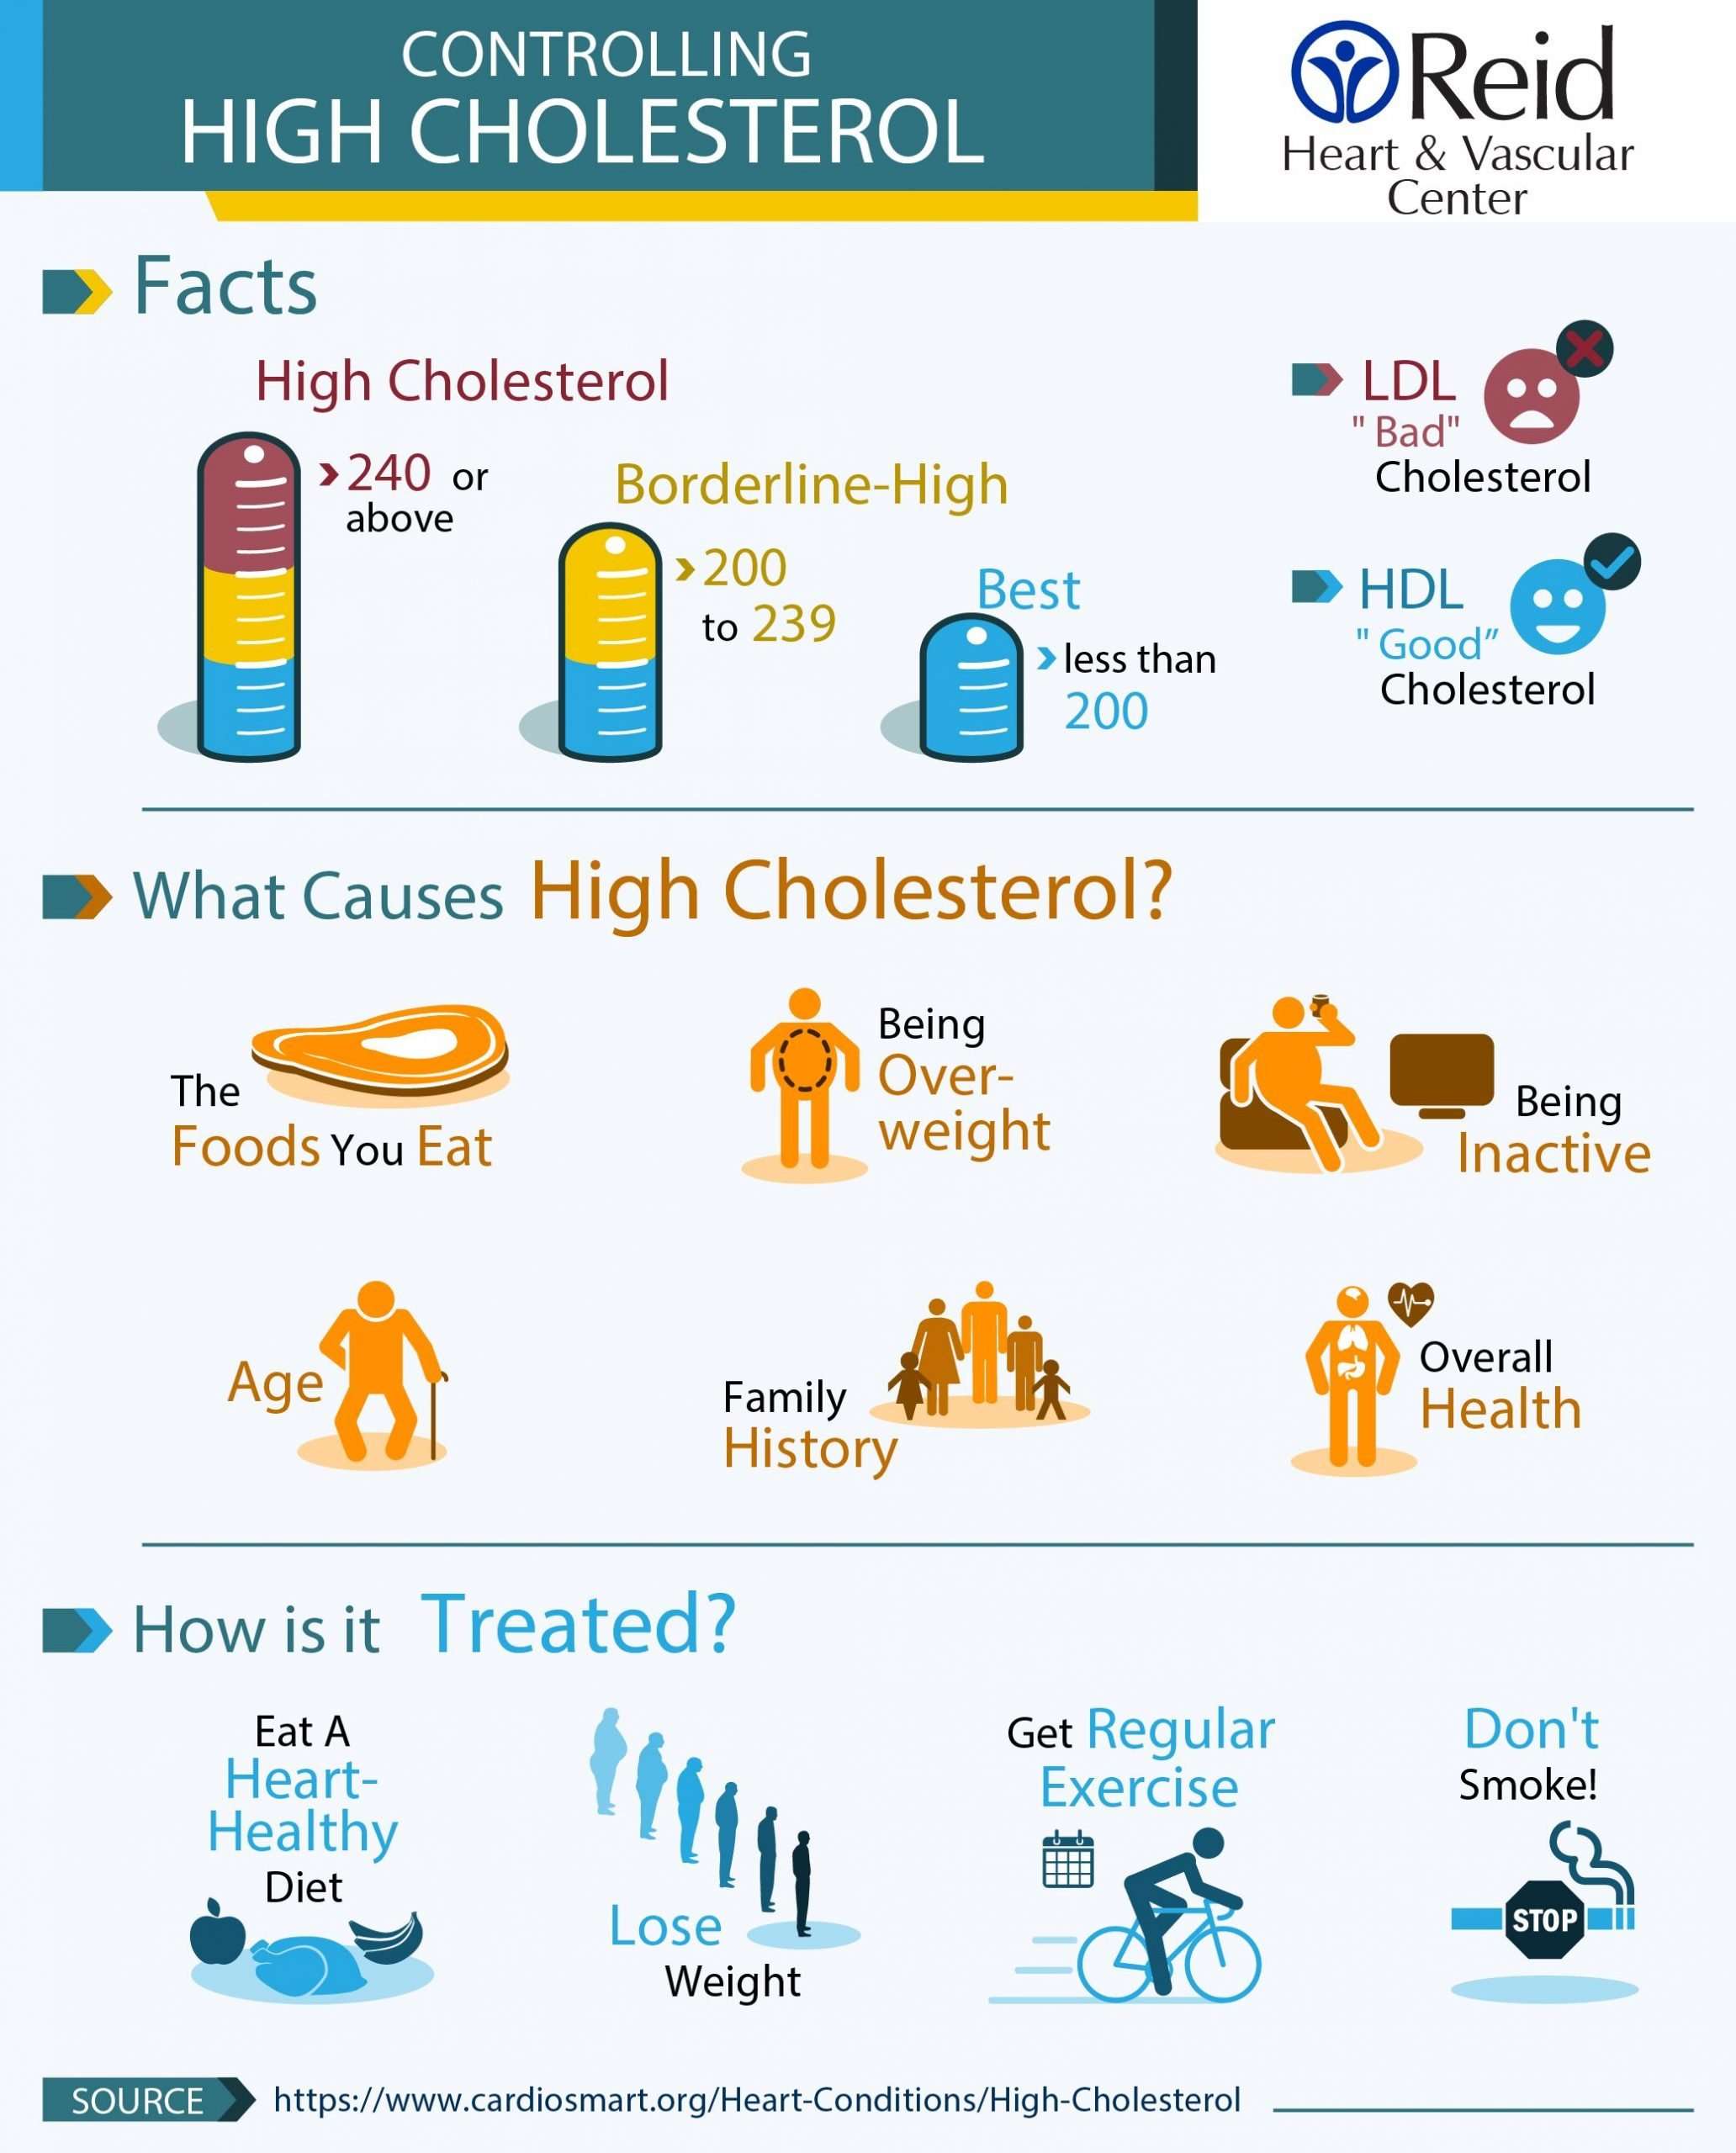 Controlling High Cholesterol